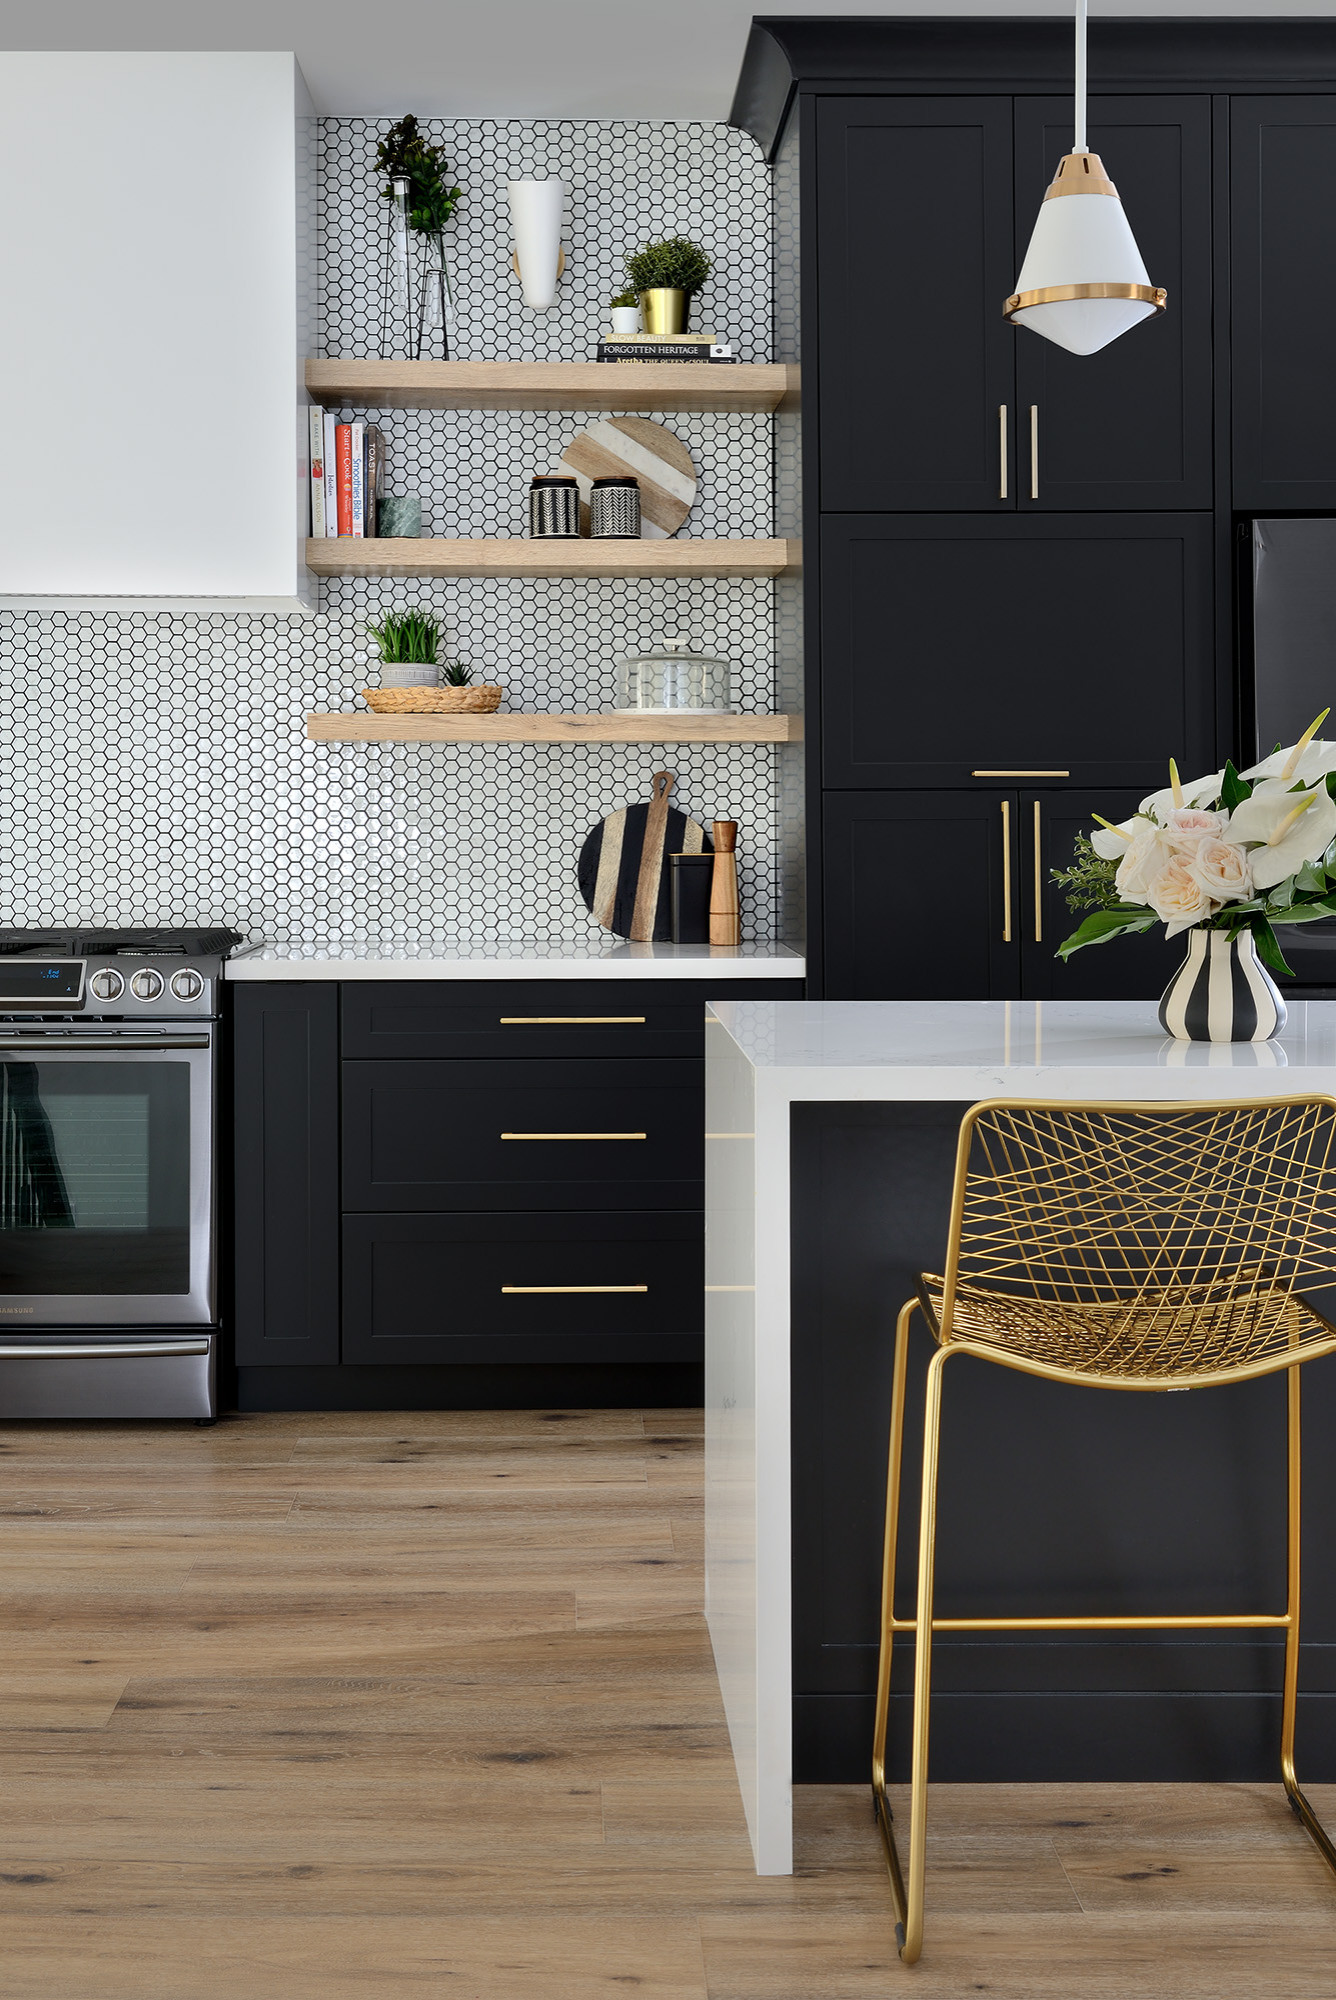 Brass and Marble Shelf Over Kitchen Sink - Transitional - Kitchen